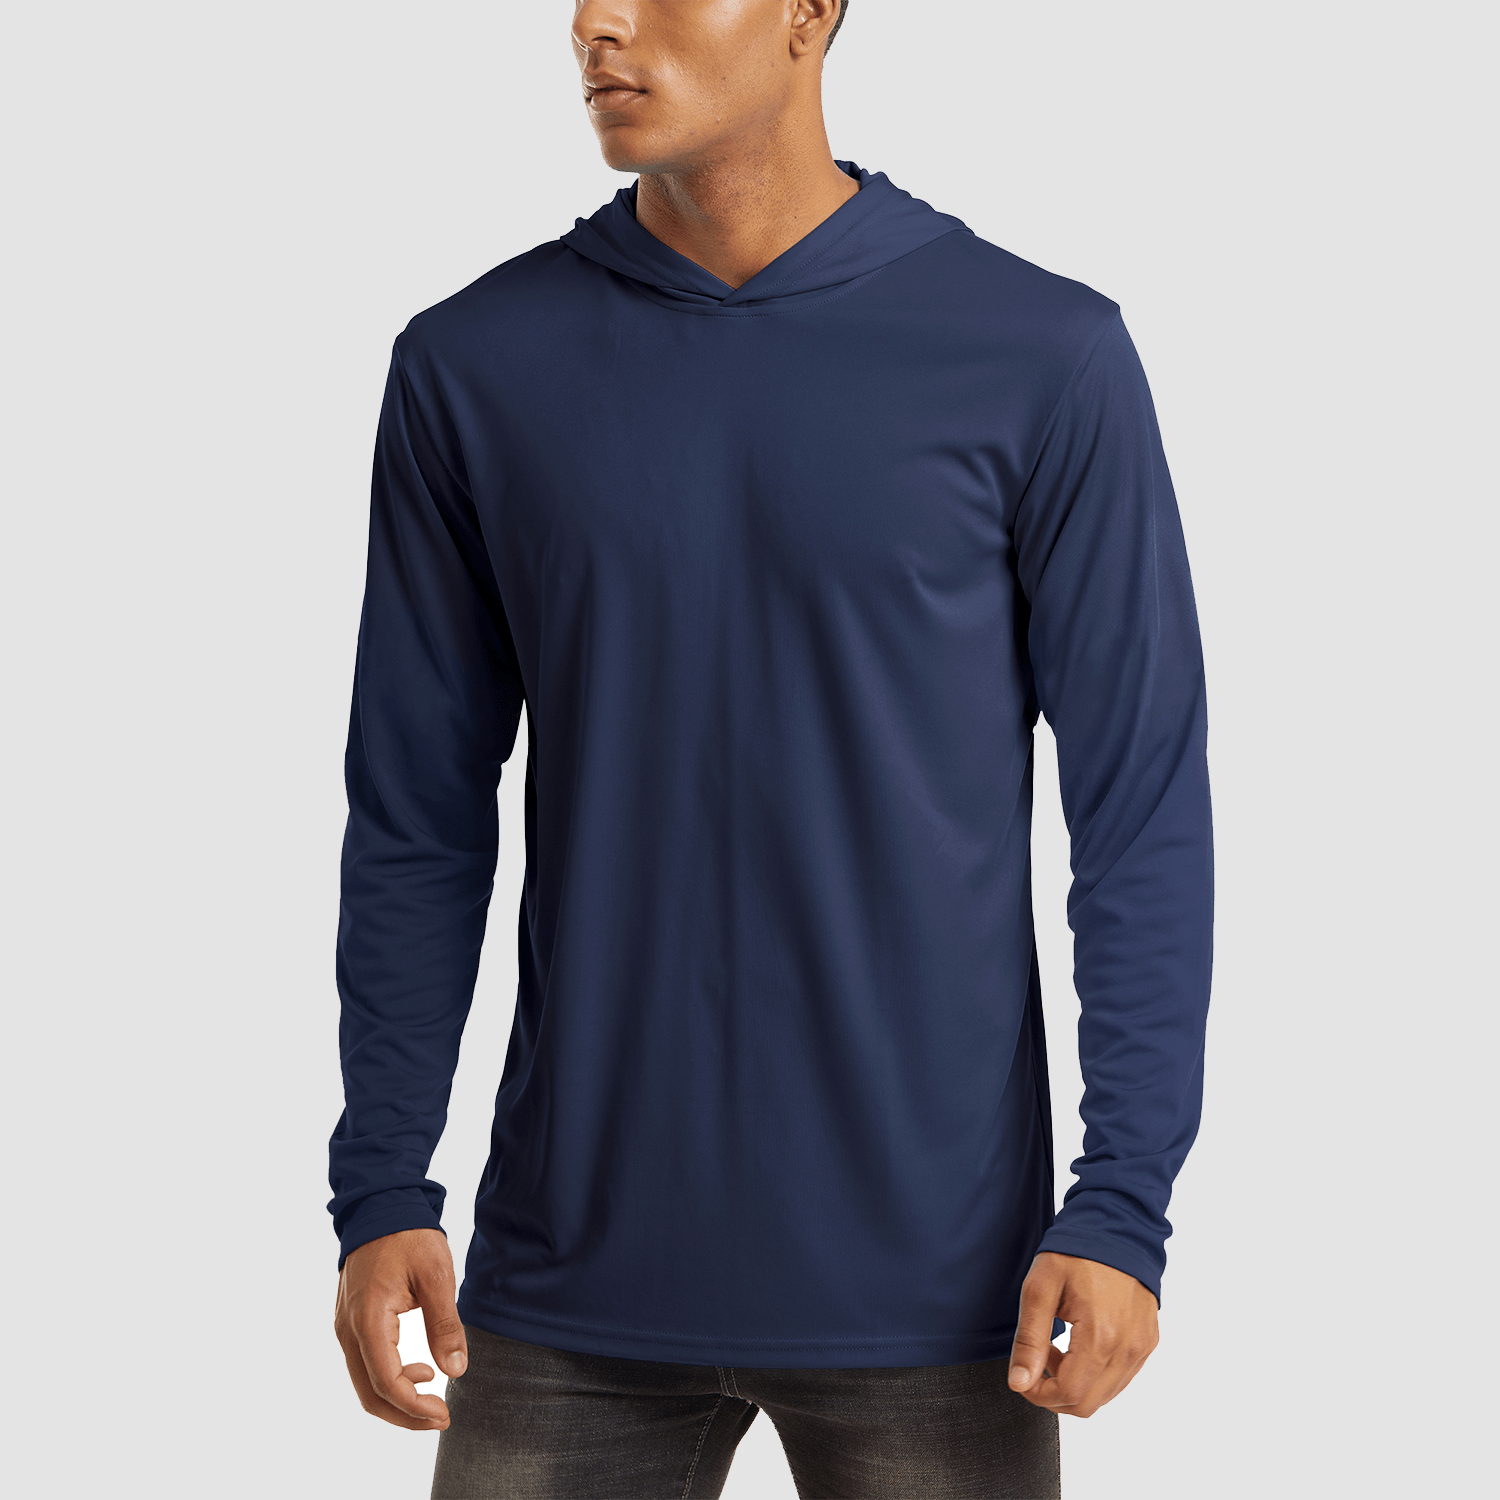 【Buy 4 Get 4th Free】Men's Long Sleeve Hooded Shirt UPF 50+ Athletic Shirts, Navy / S